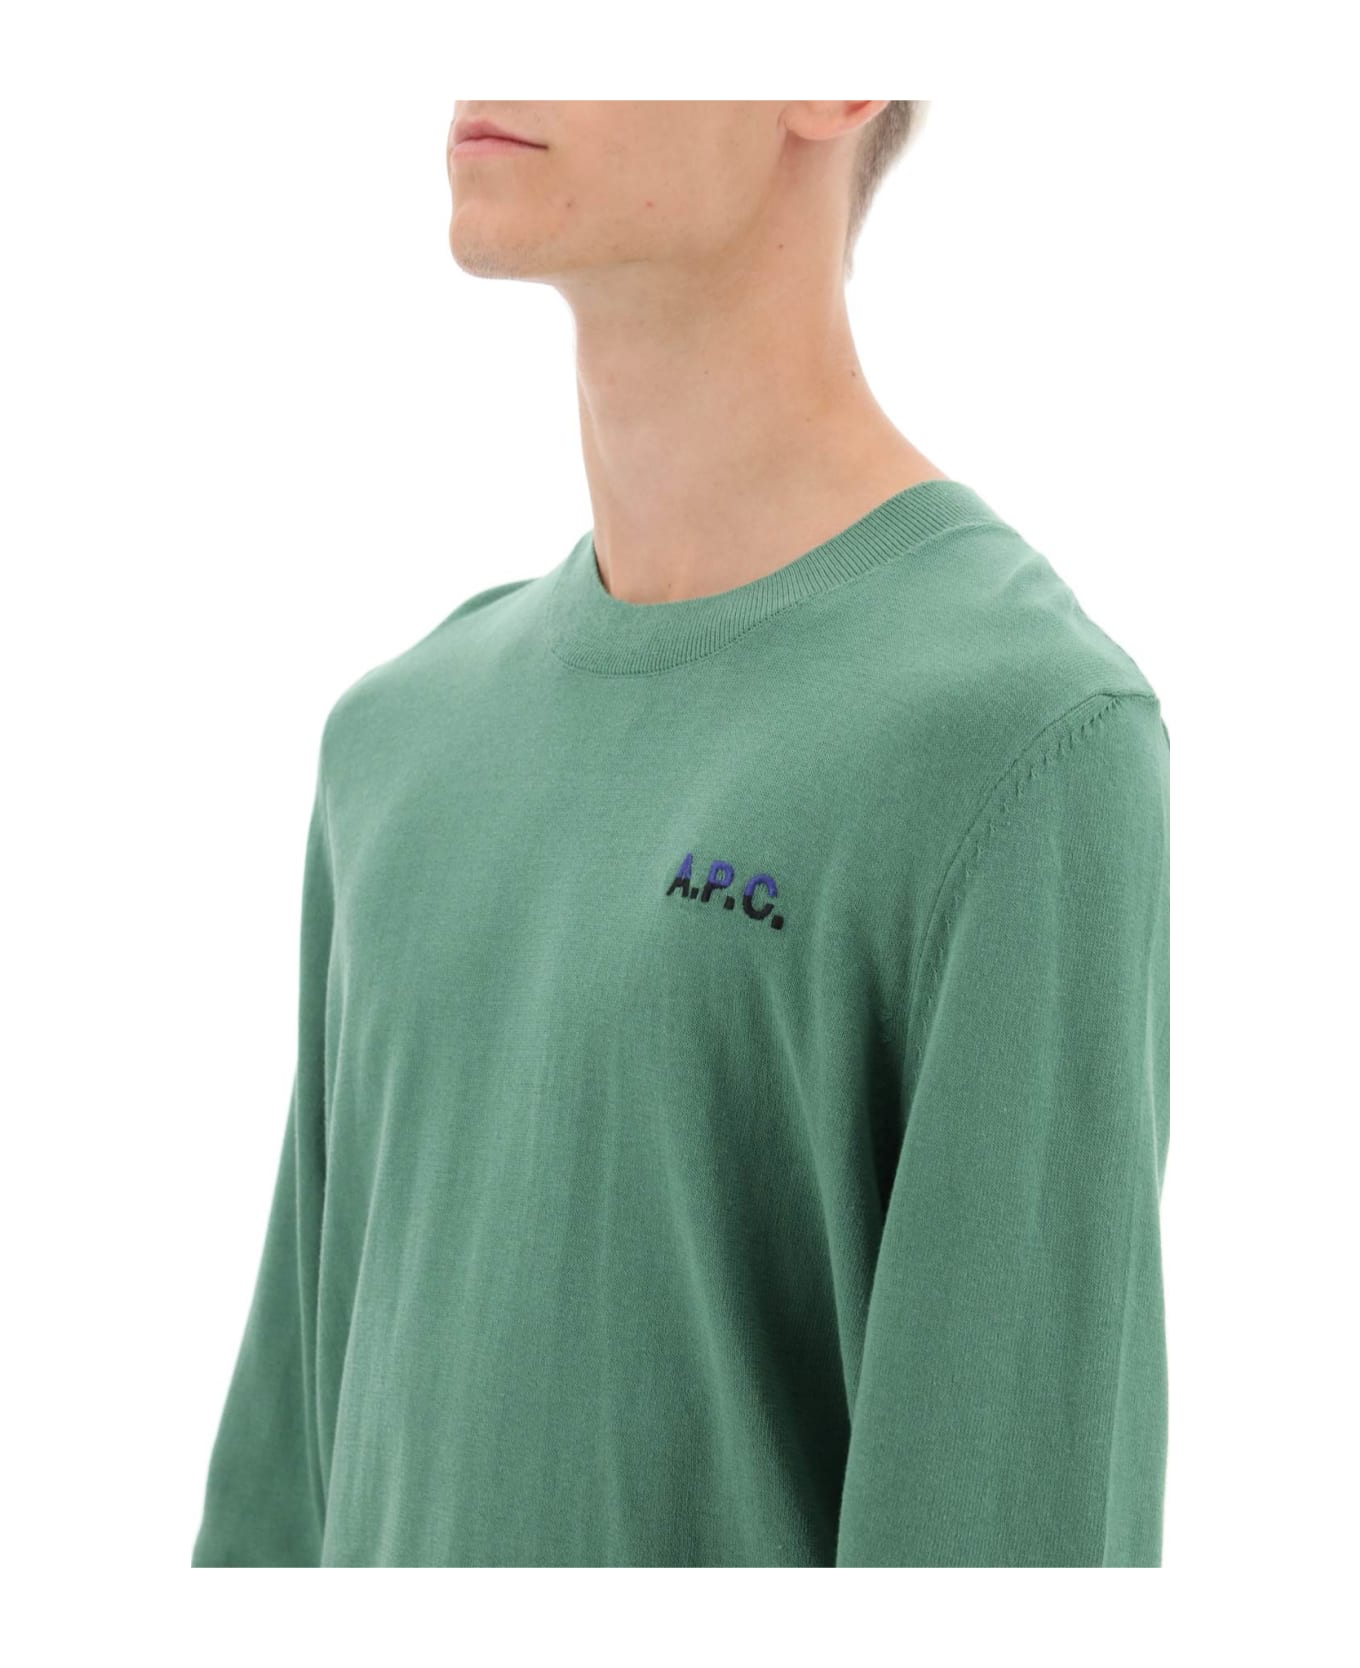 A.P.C. Cotton Crewneck Sweater - Tki Vert Marine name:475